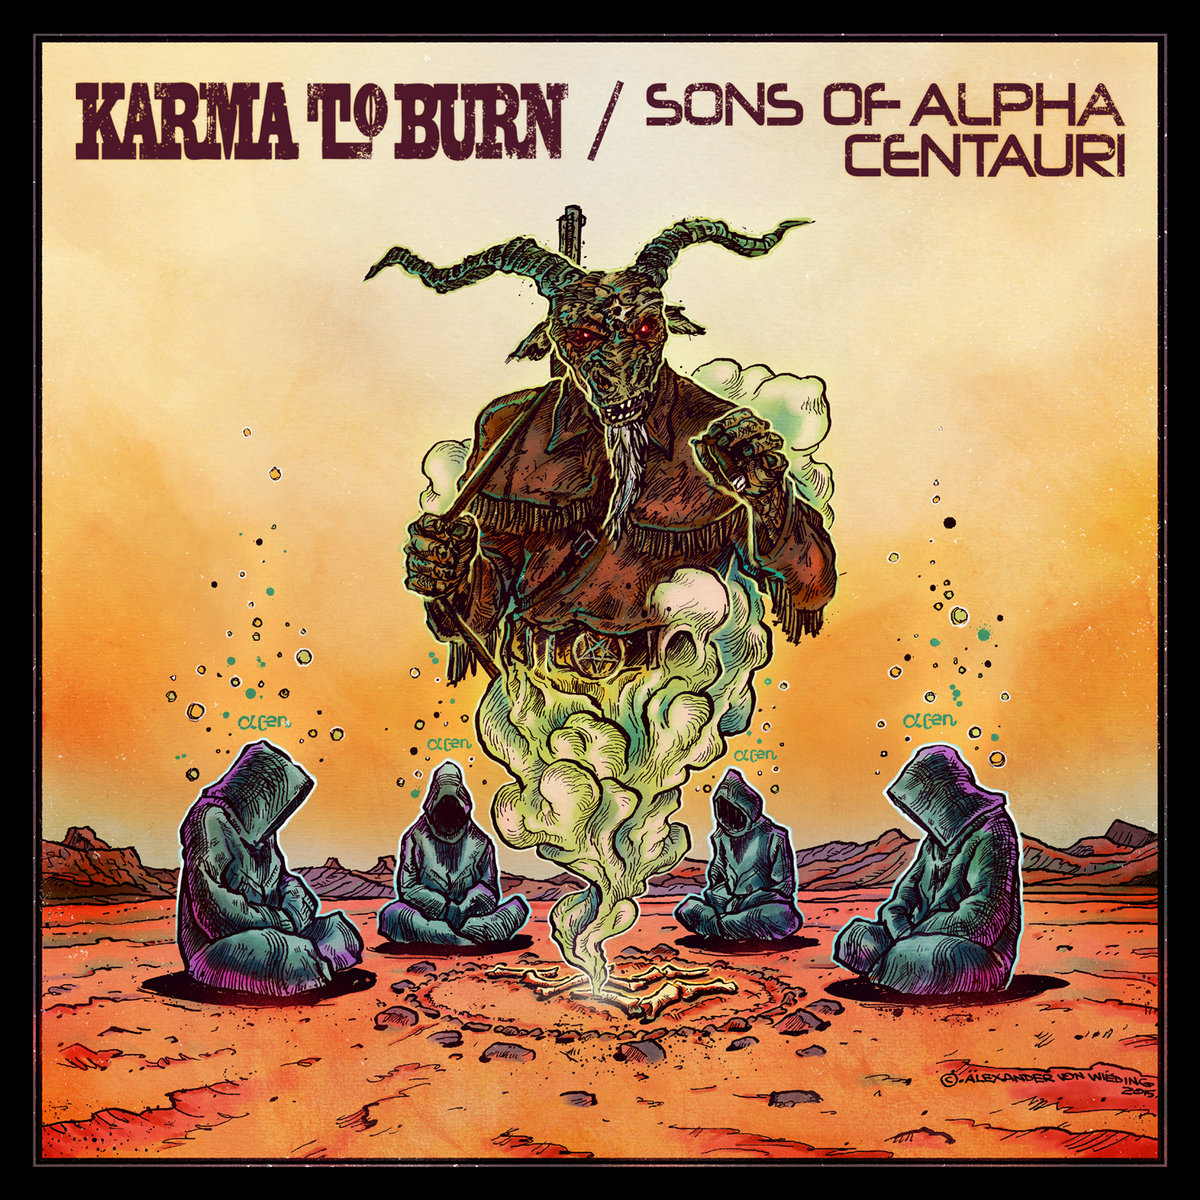 KARMA TO BURN (USA) / SONS OF ALPHA CENTAURI (UK) – The Definitive 7″ Trilogy!